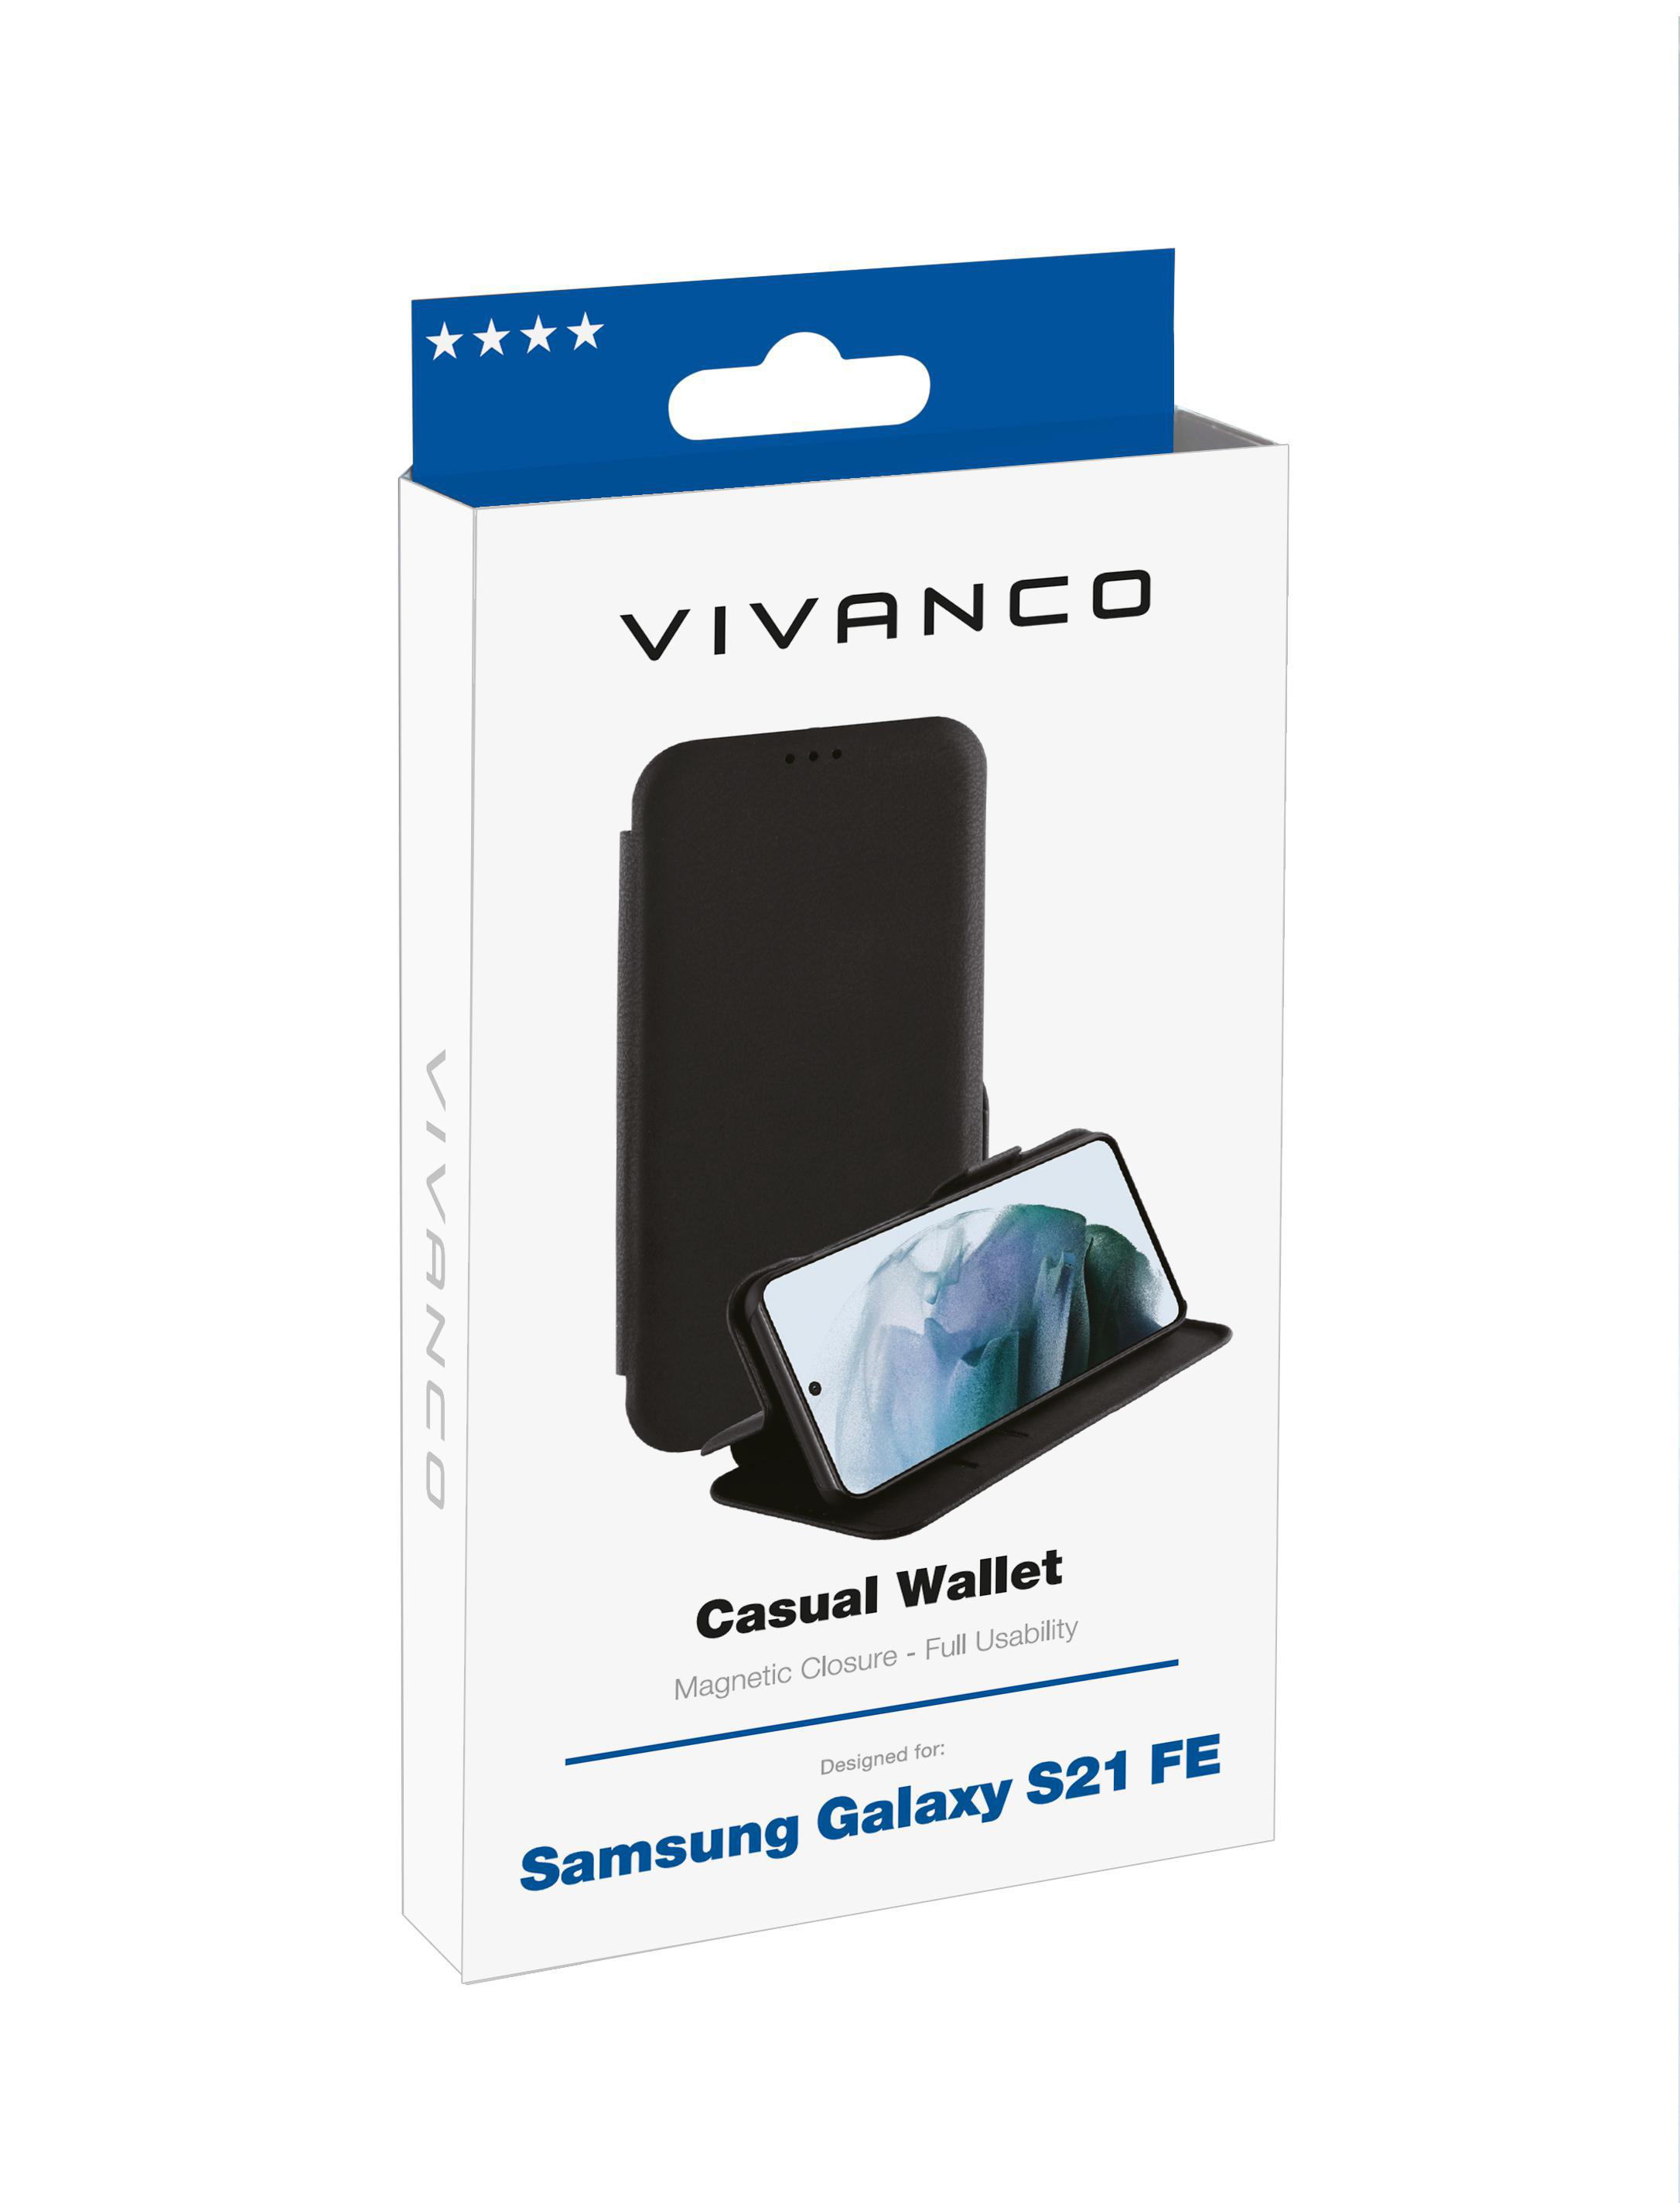 VIVANCO Casual Wallet Schutzhülle, Bookcover, Samsung, S21 Schwarz Galaxy FE